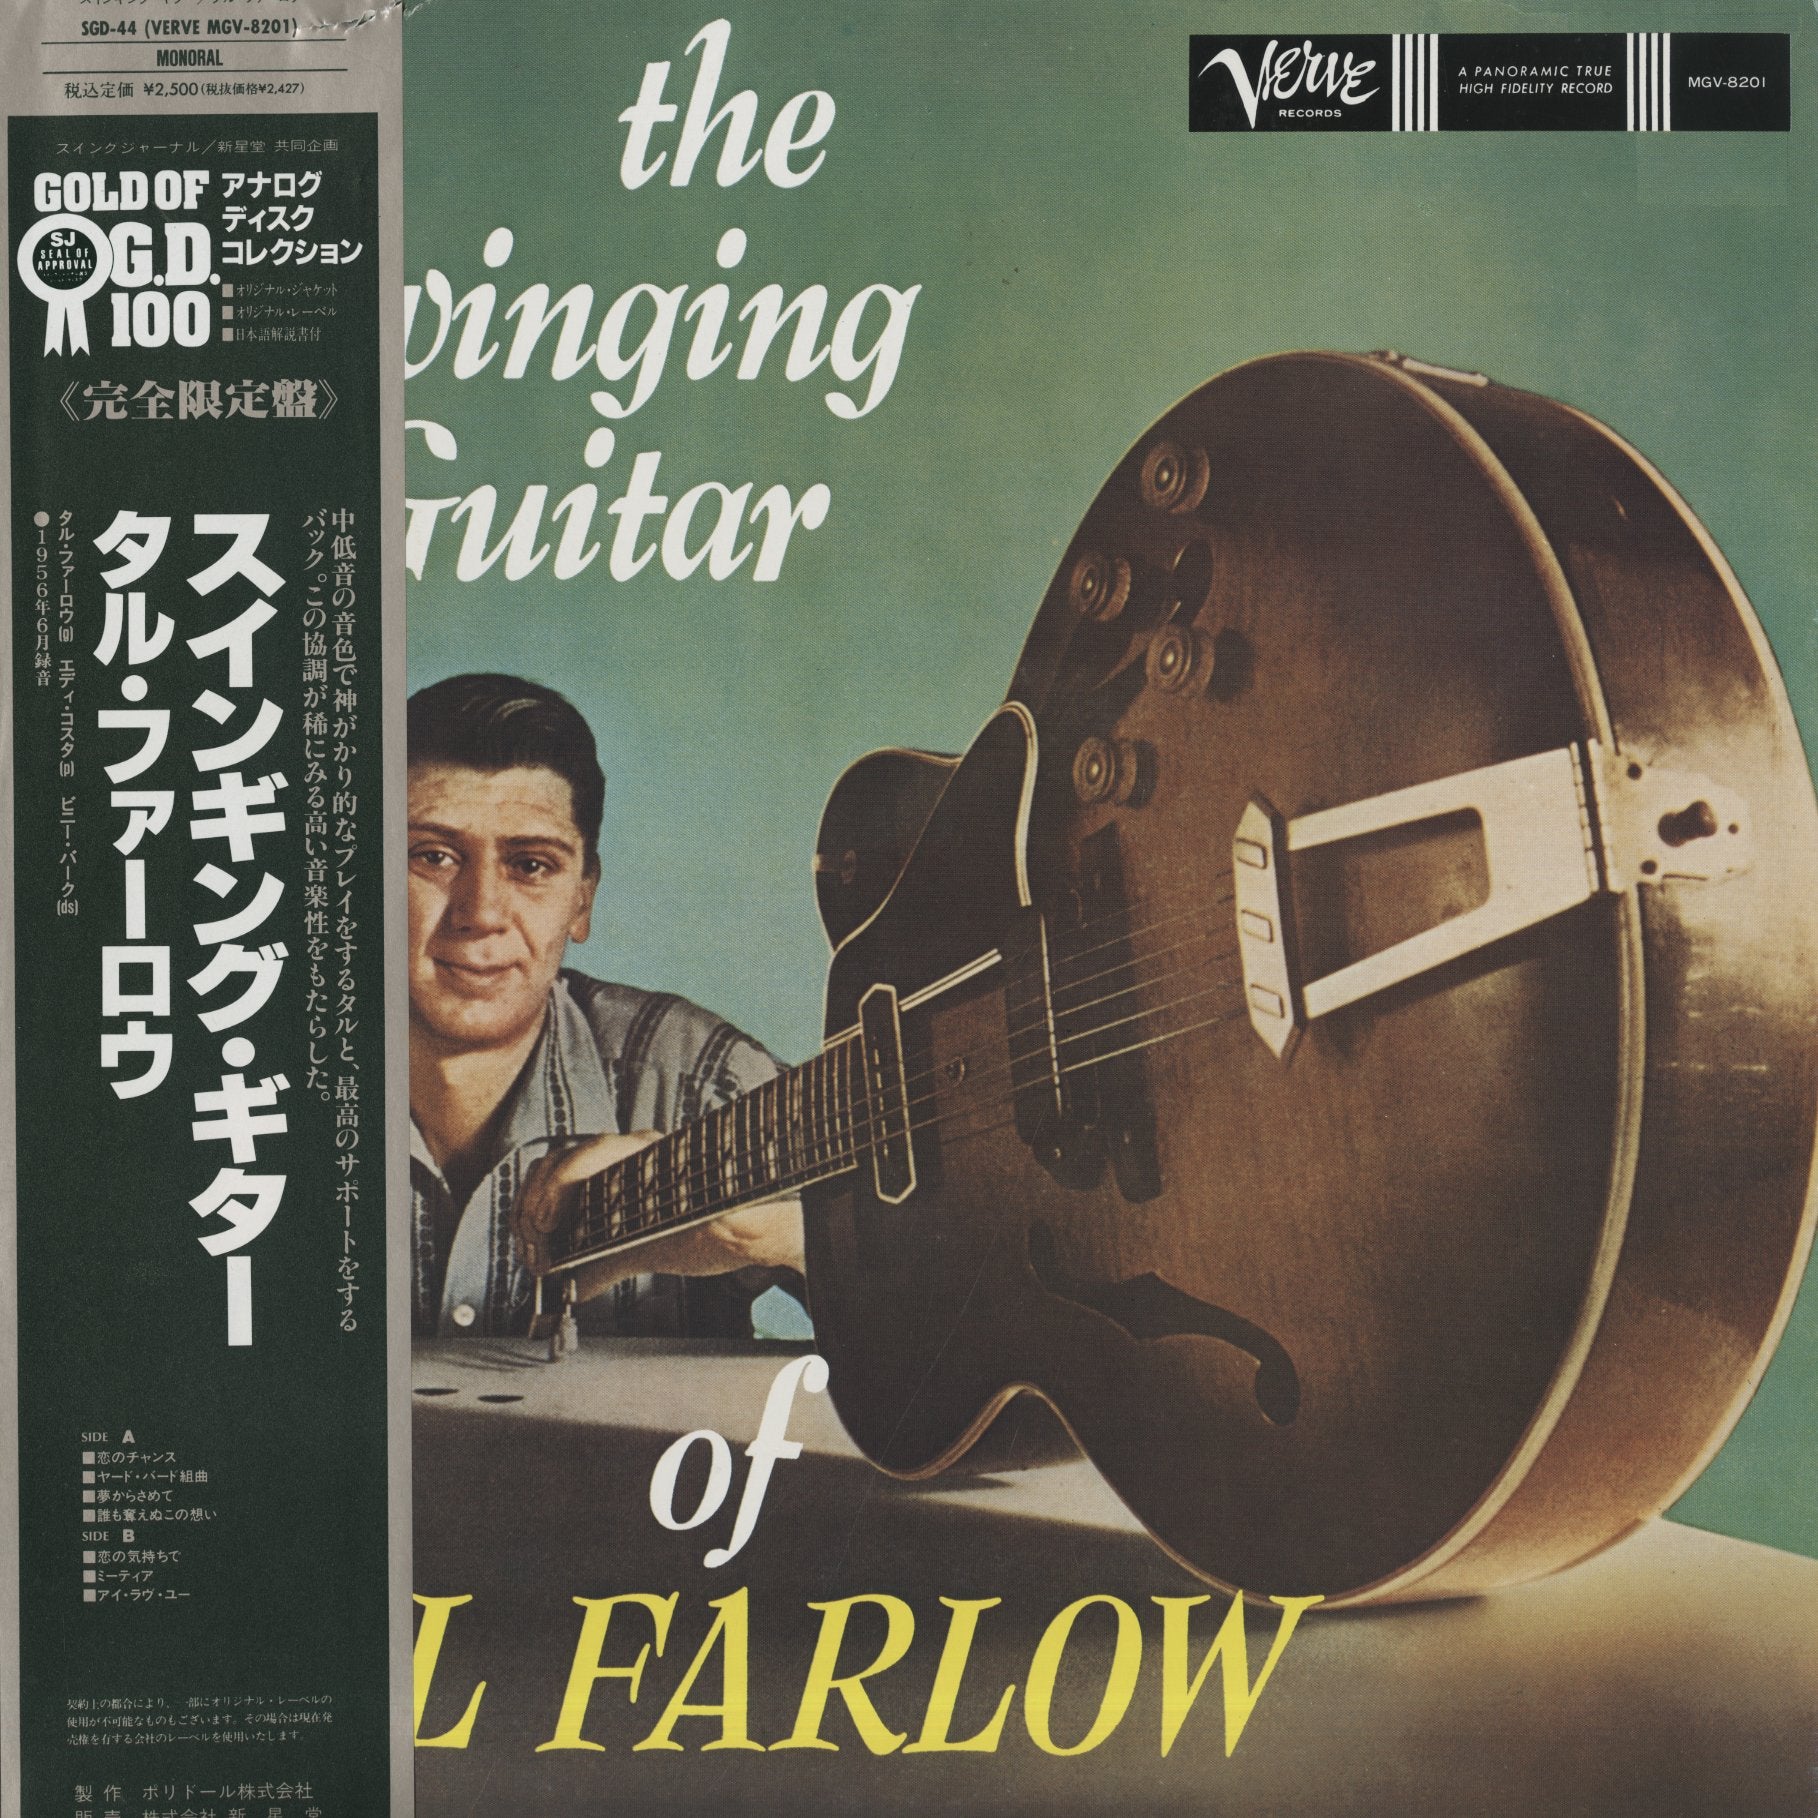 Tal Farlow タル・ファーロウ The Swinging Guitar of (SGD-44) – VOXMUSIC WEBSHOP